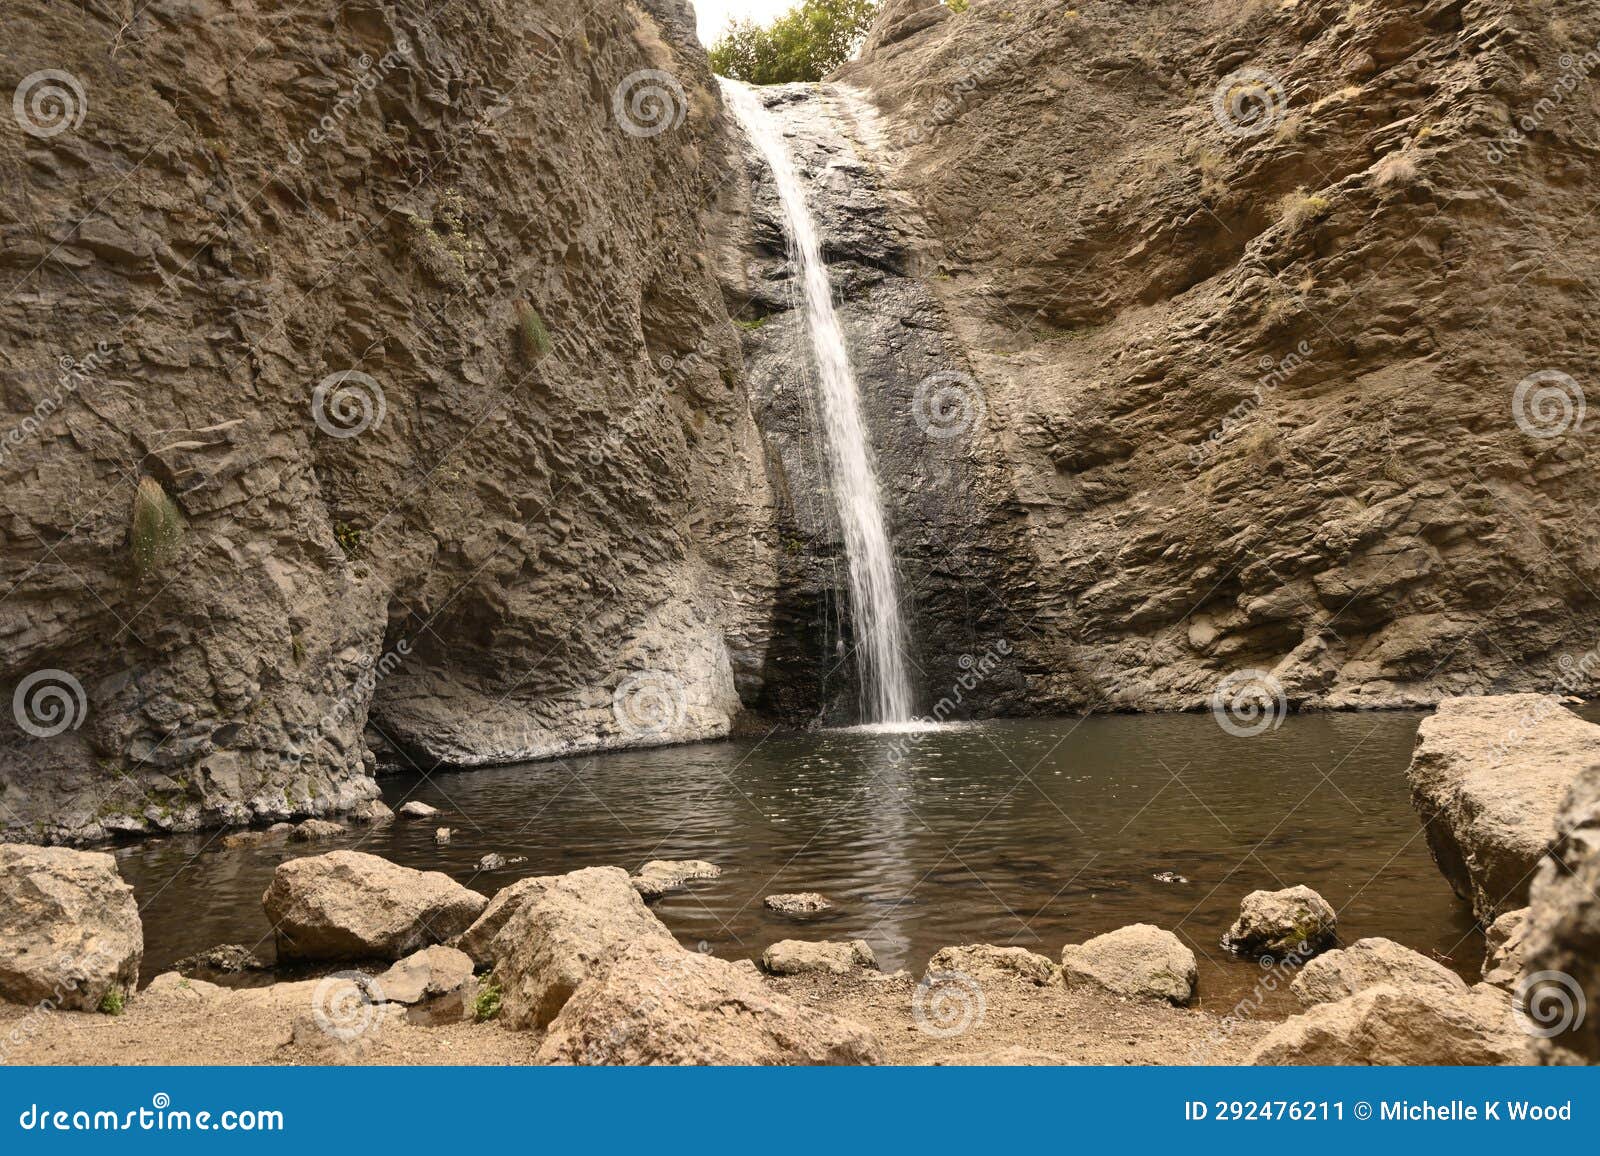 Jump Creek Falls Waterfall, Marsing, Idaho in the Owyhee Mountains ...